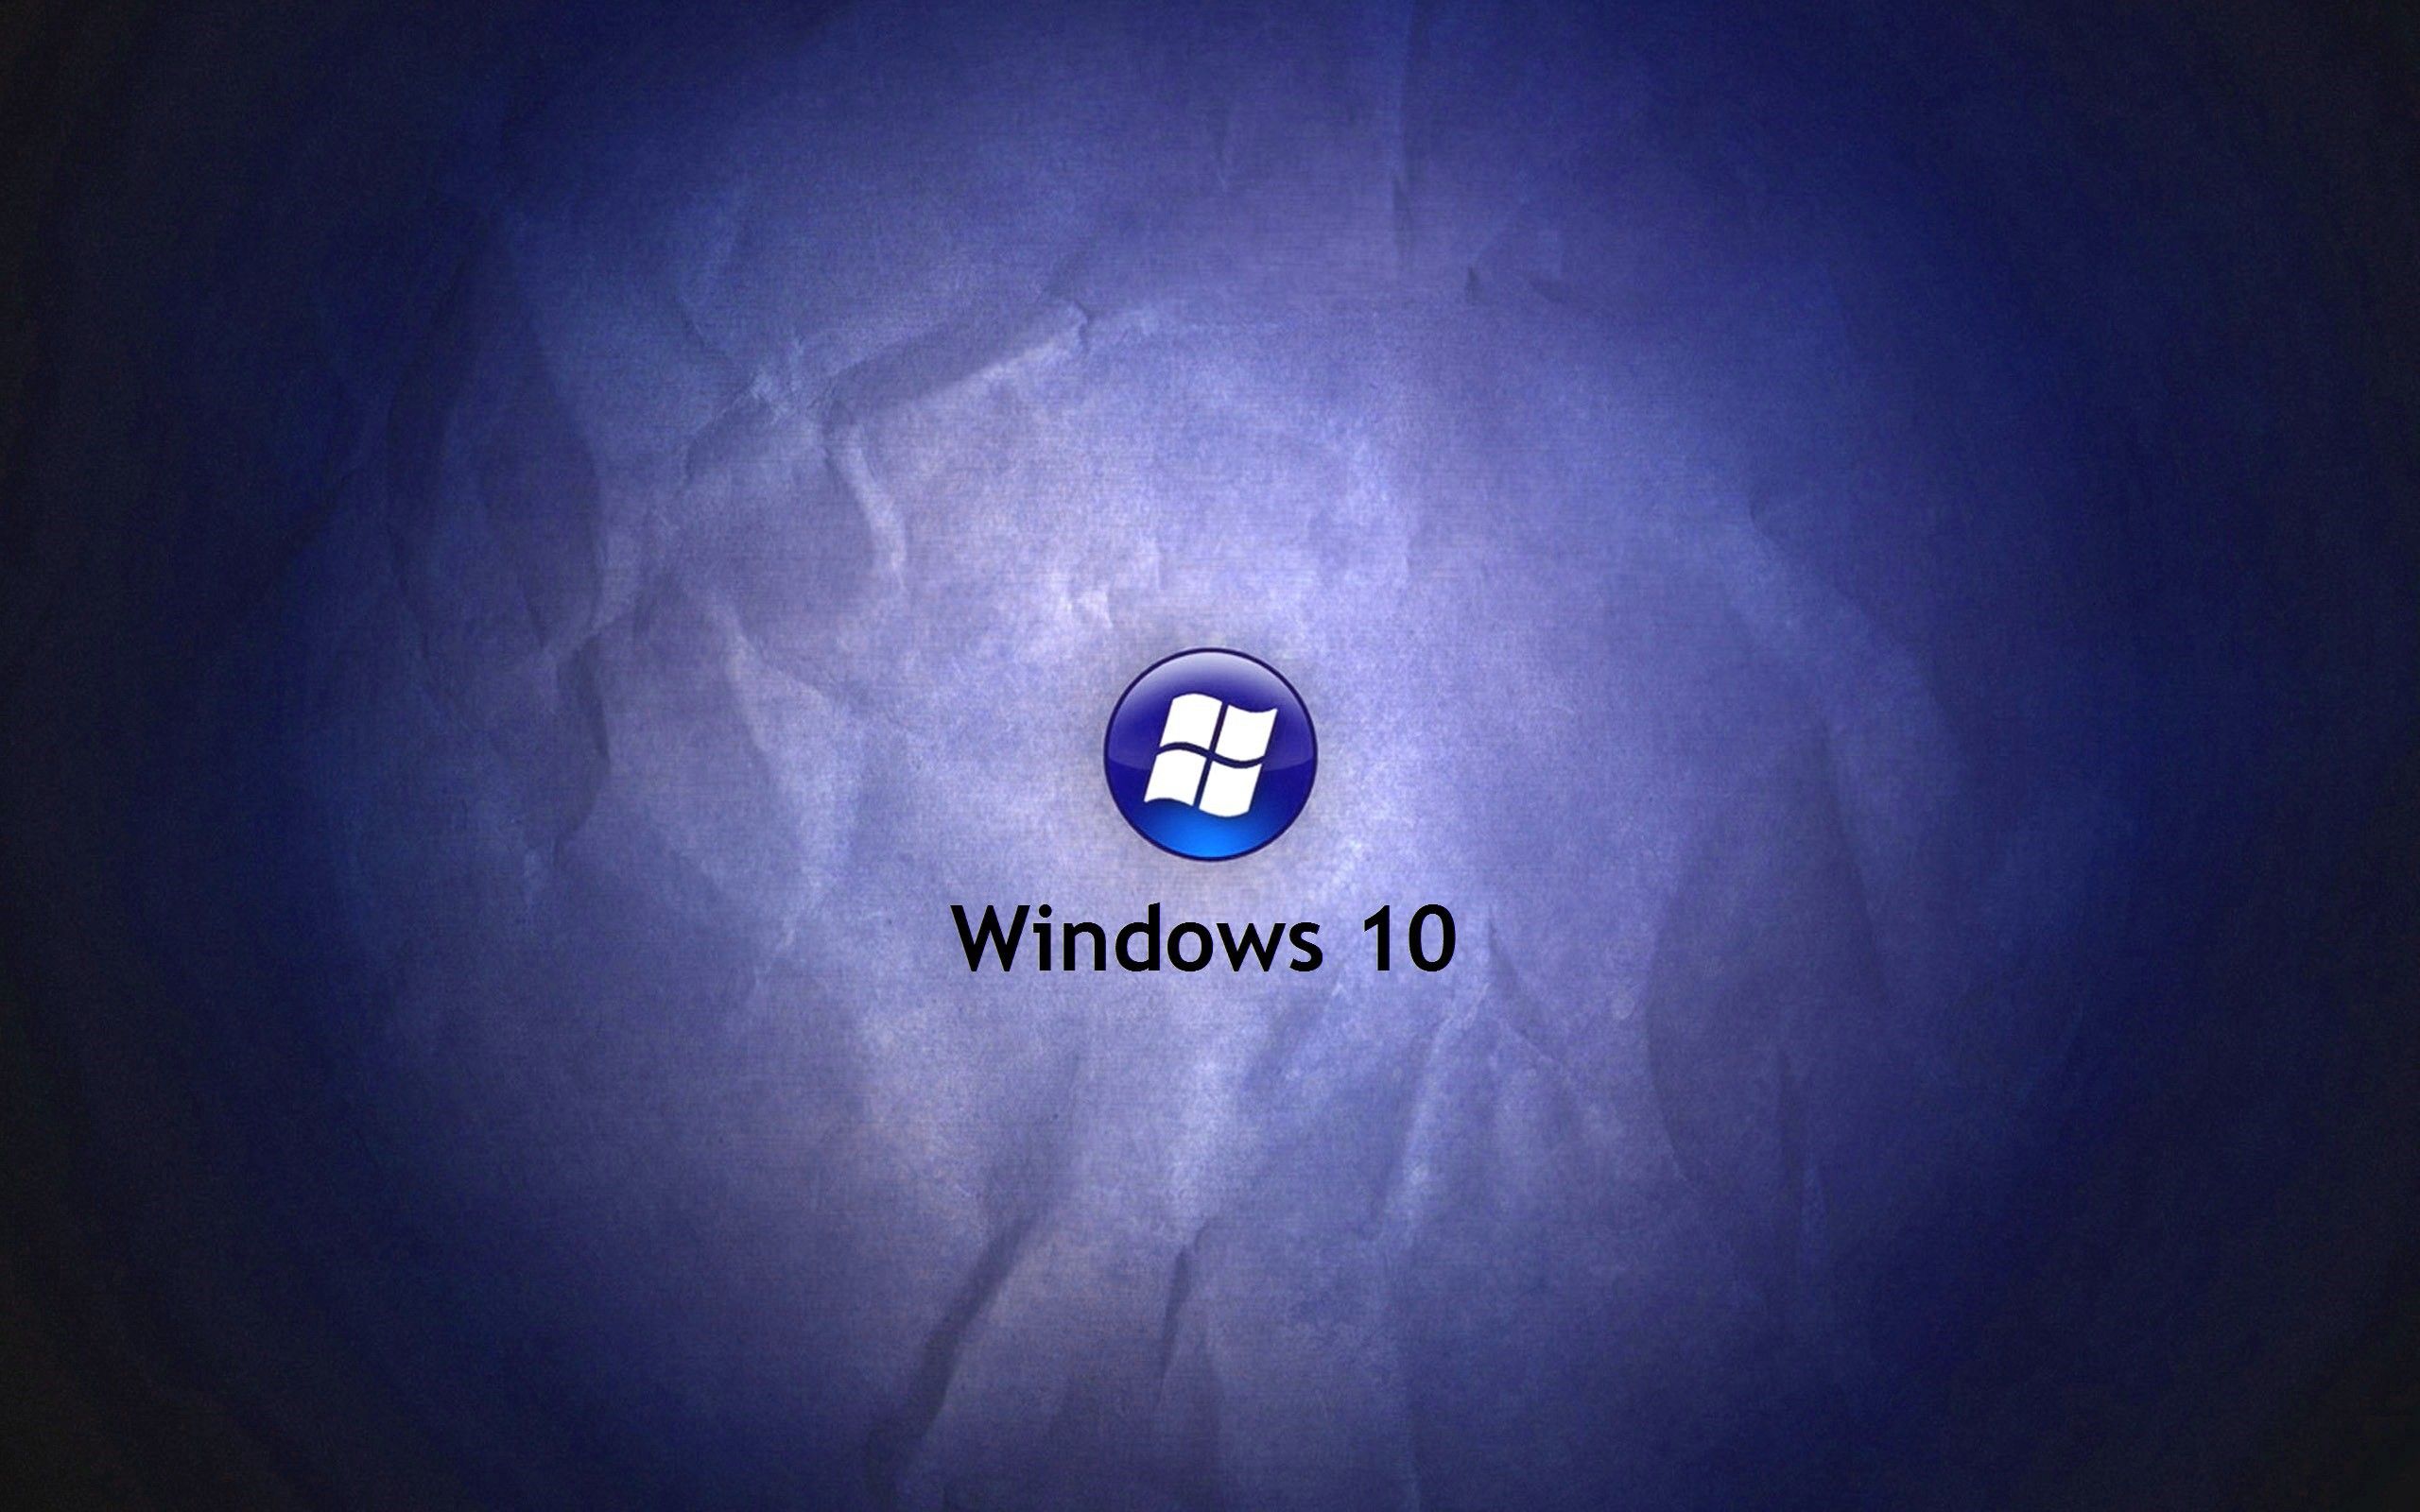 HD ویندوز 10 (Windows 10 HD Background)